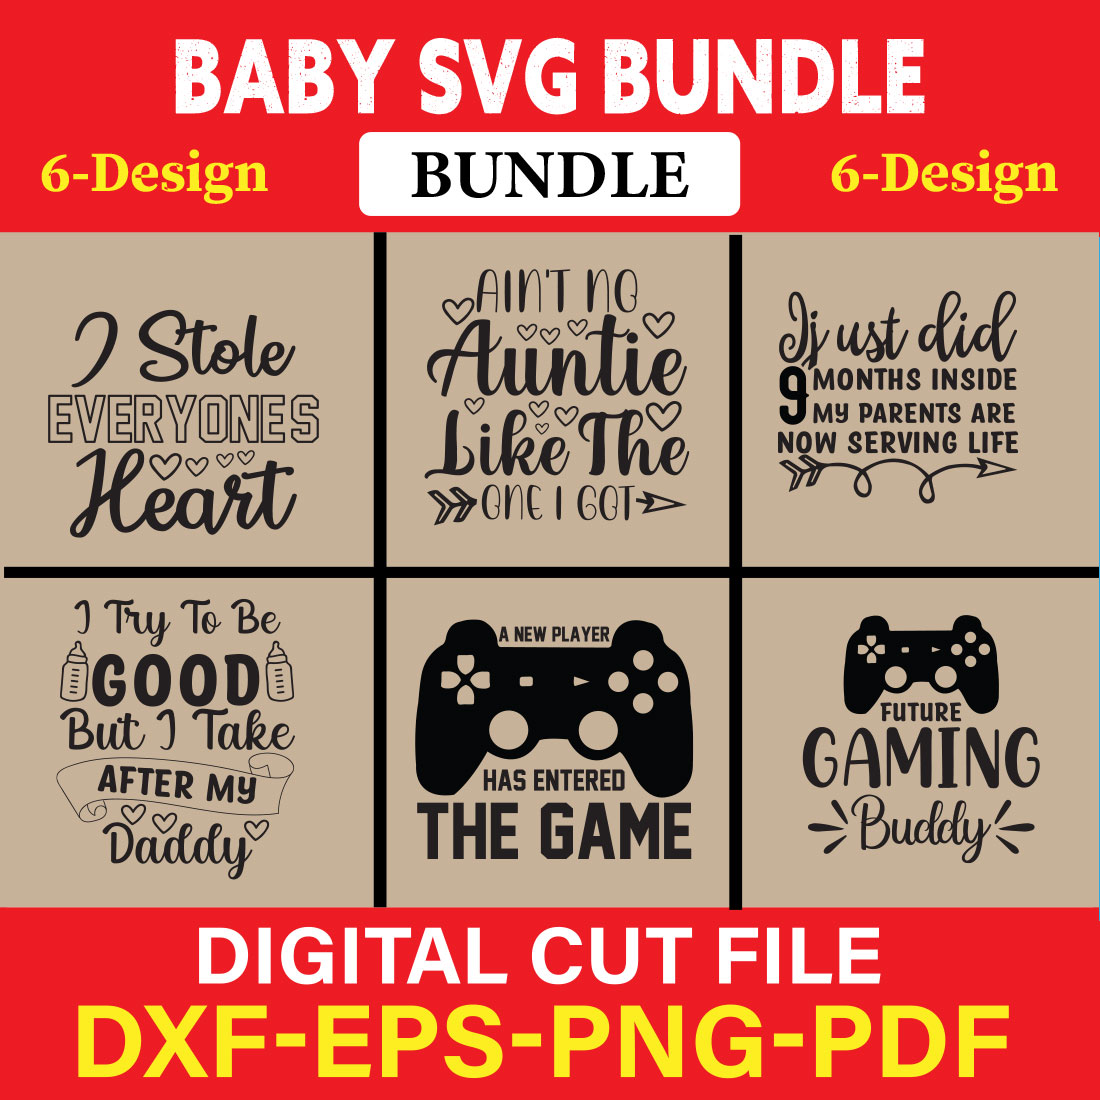 Baby SVG Bundle - Baby Girl Bundle Vol-03 cover image.